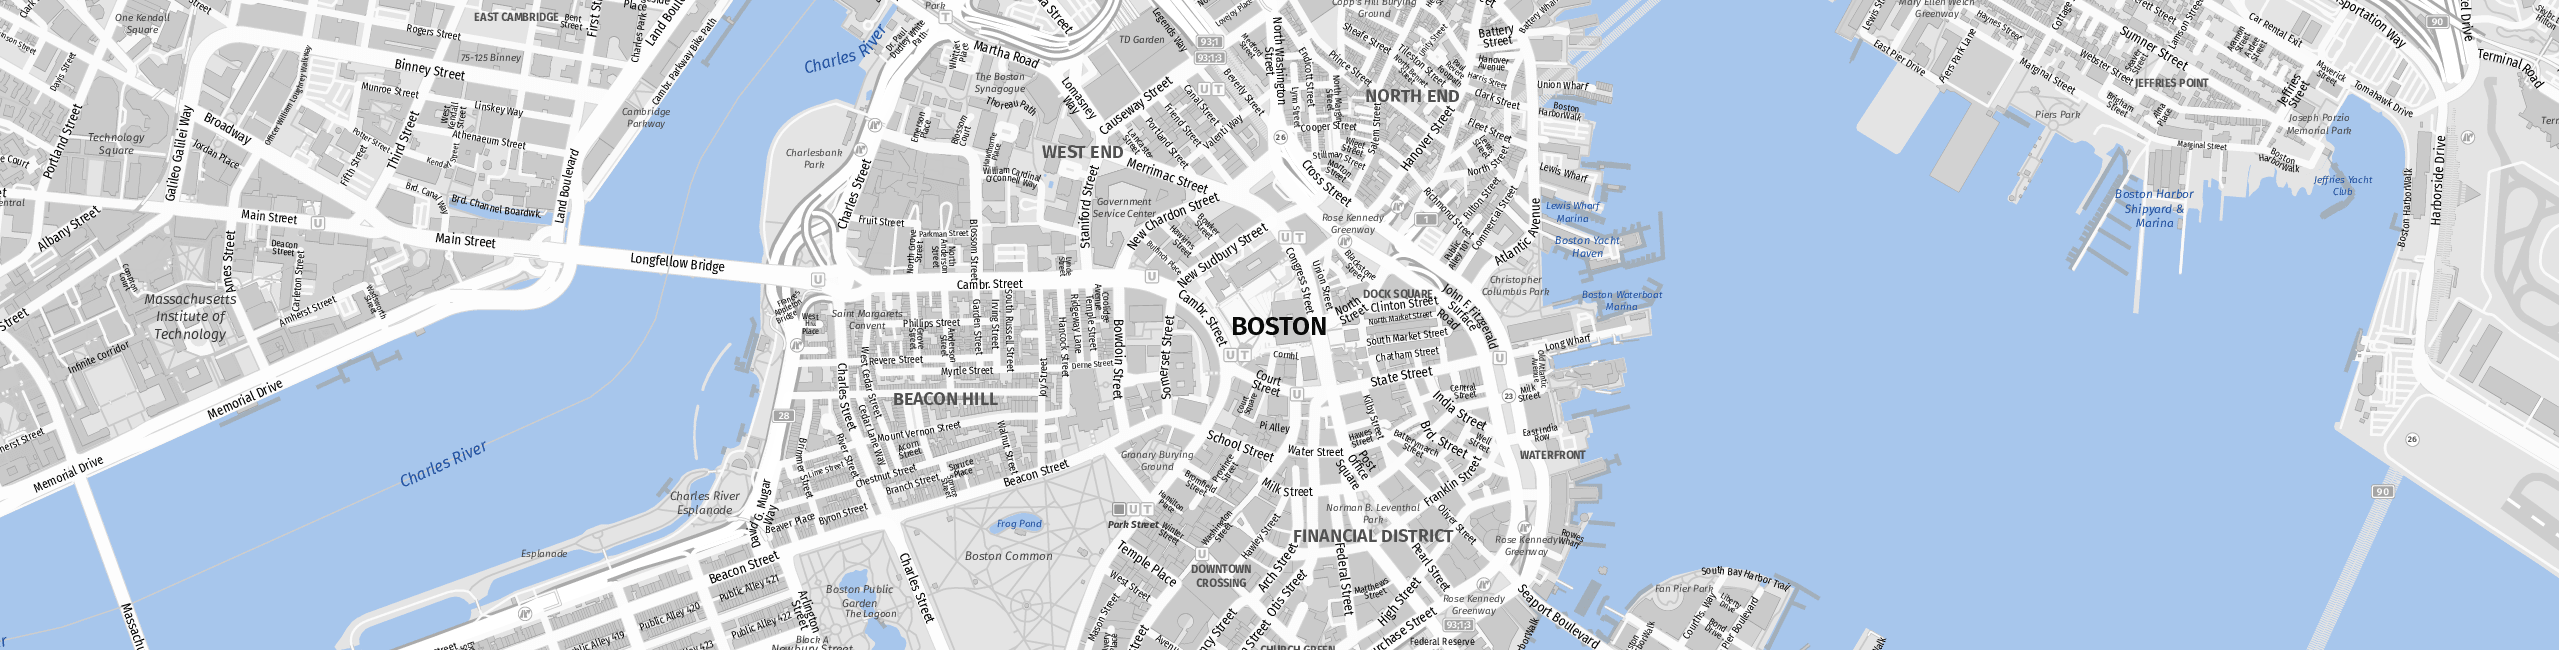 Stadtplan Boston zum Downloaden.